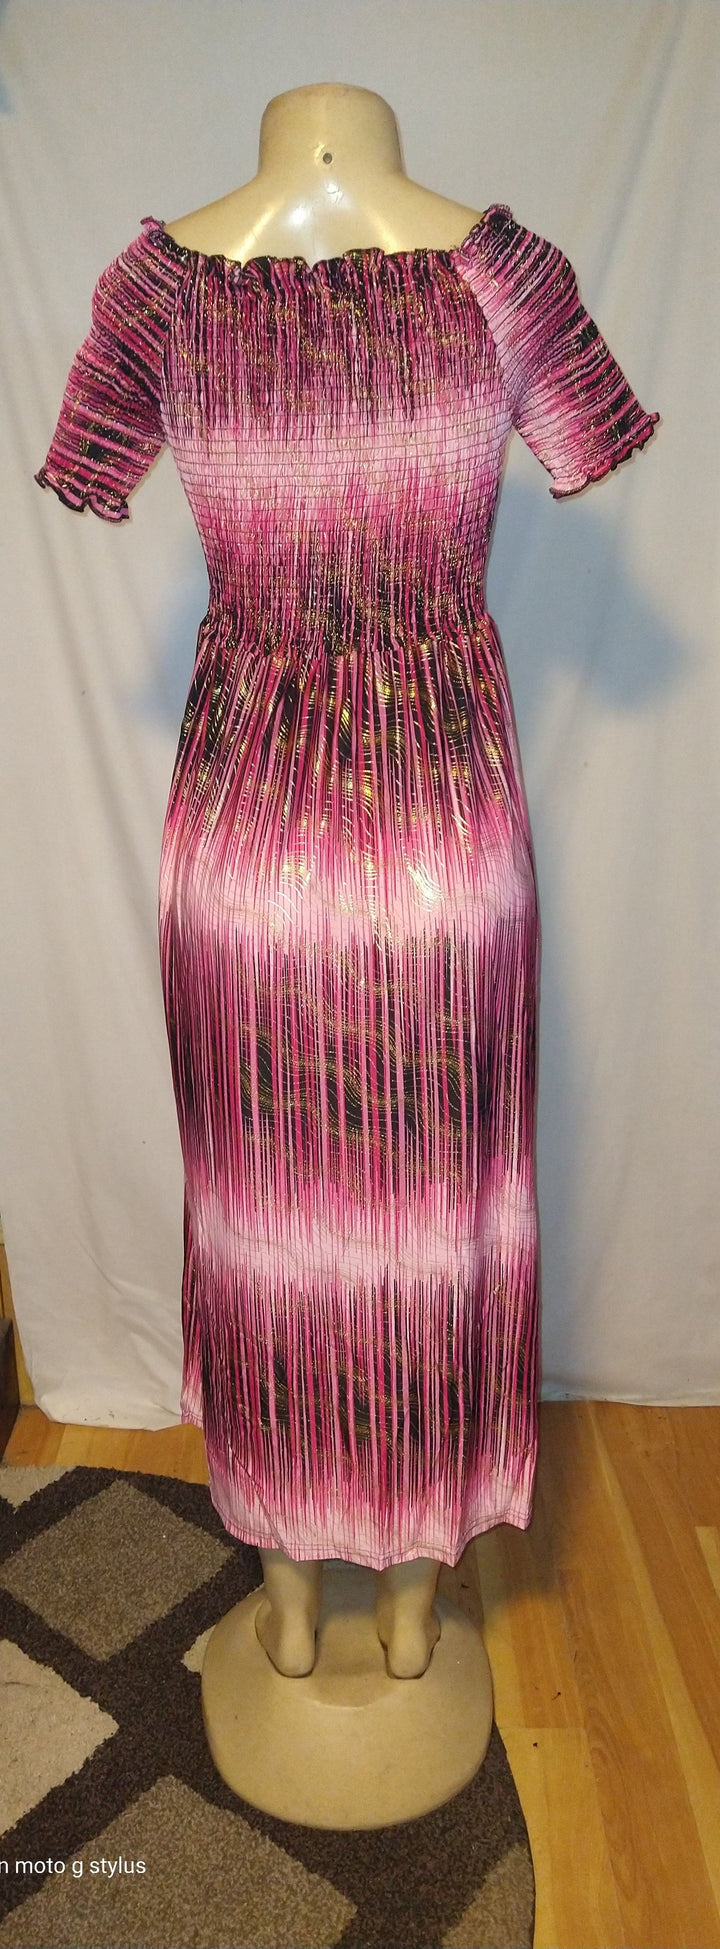 Pink Metallic Dress - The Fix Clothing